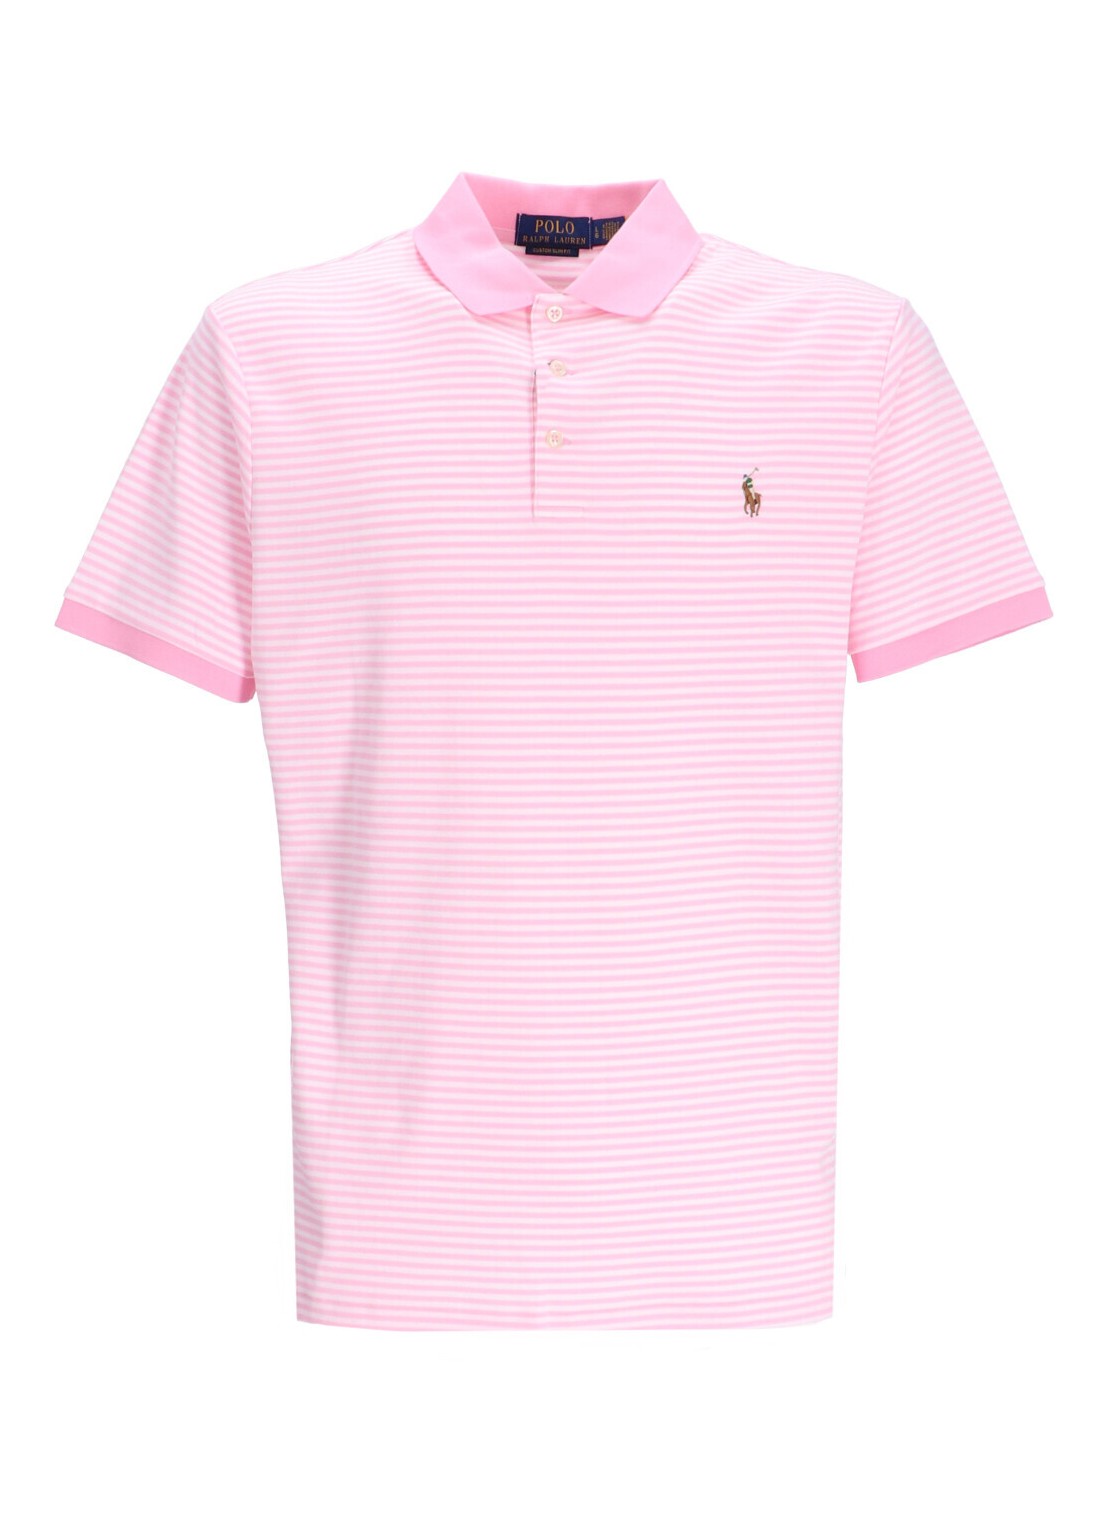 Polo polo ralph lauren polo man ssydkcm15-short sleeve-polo shirt 710929079003 carmel pink white tal